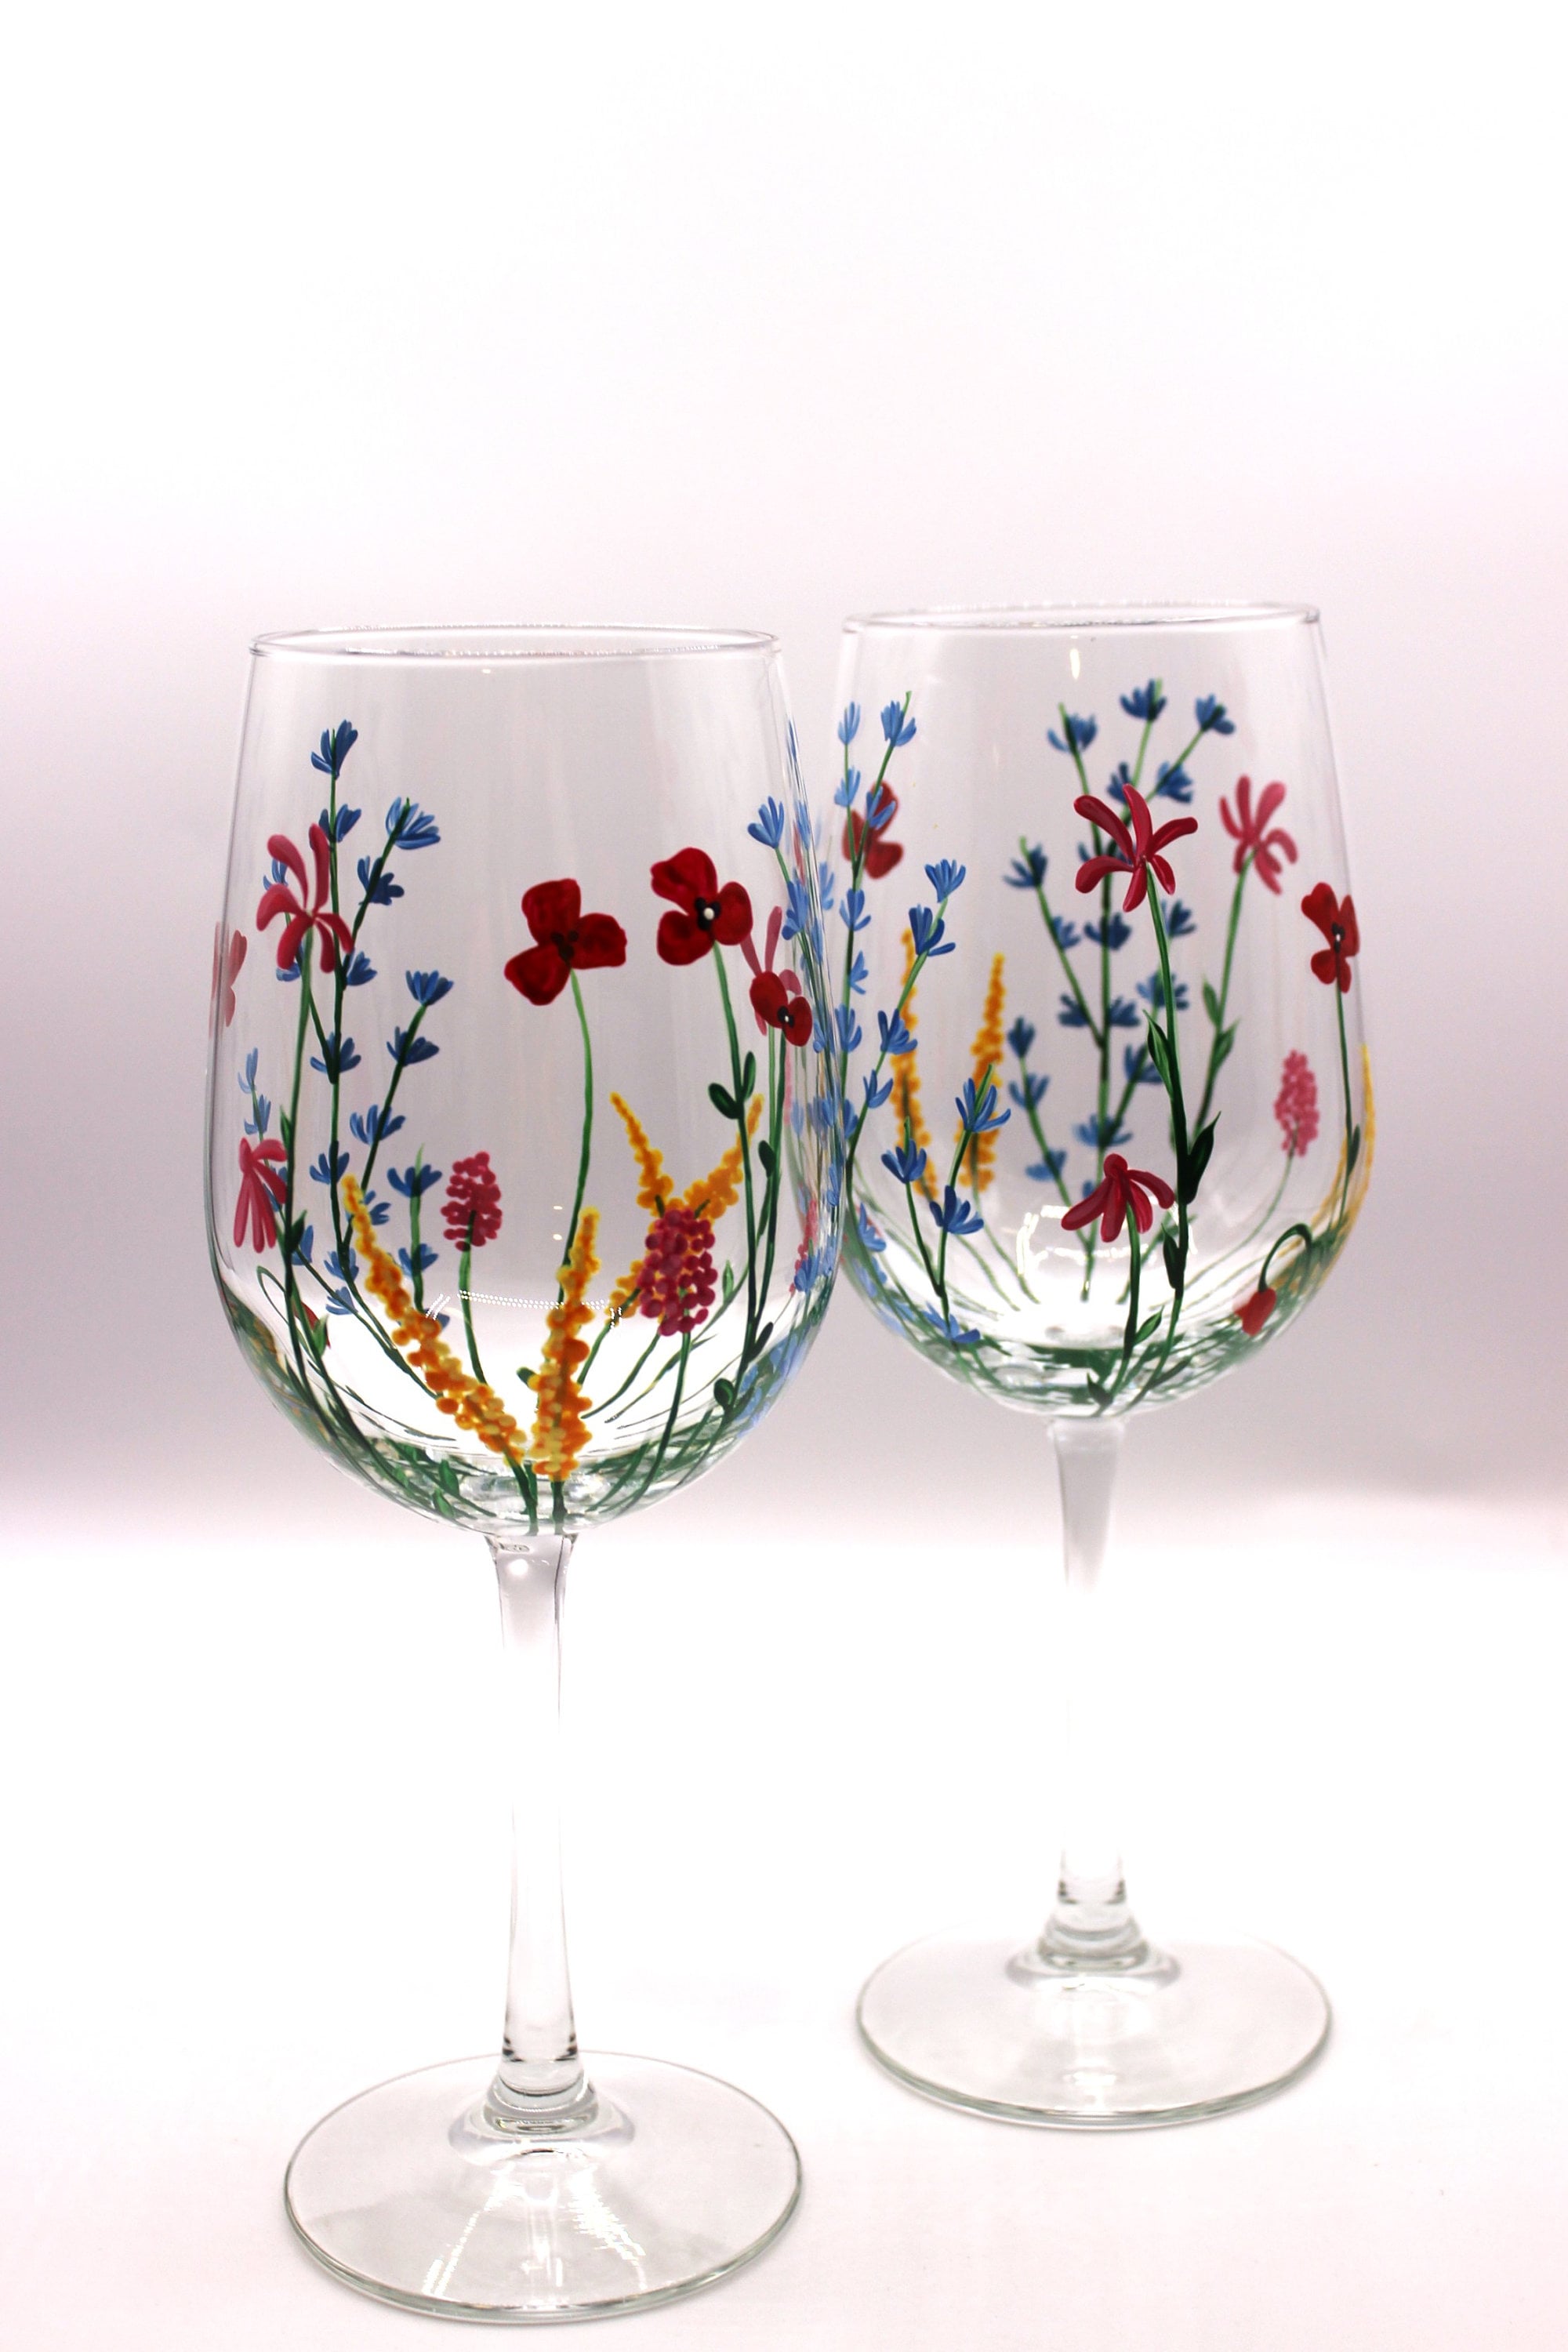 OJA Red Wine Glasses Set of 2-Premium Crystal Wine Glasses Hand Blown-15  oz,Thin Rim,Long Stem,Perfe…See more OJA Red Wine Glasses Set of 2-Premium